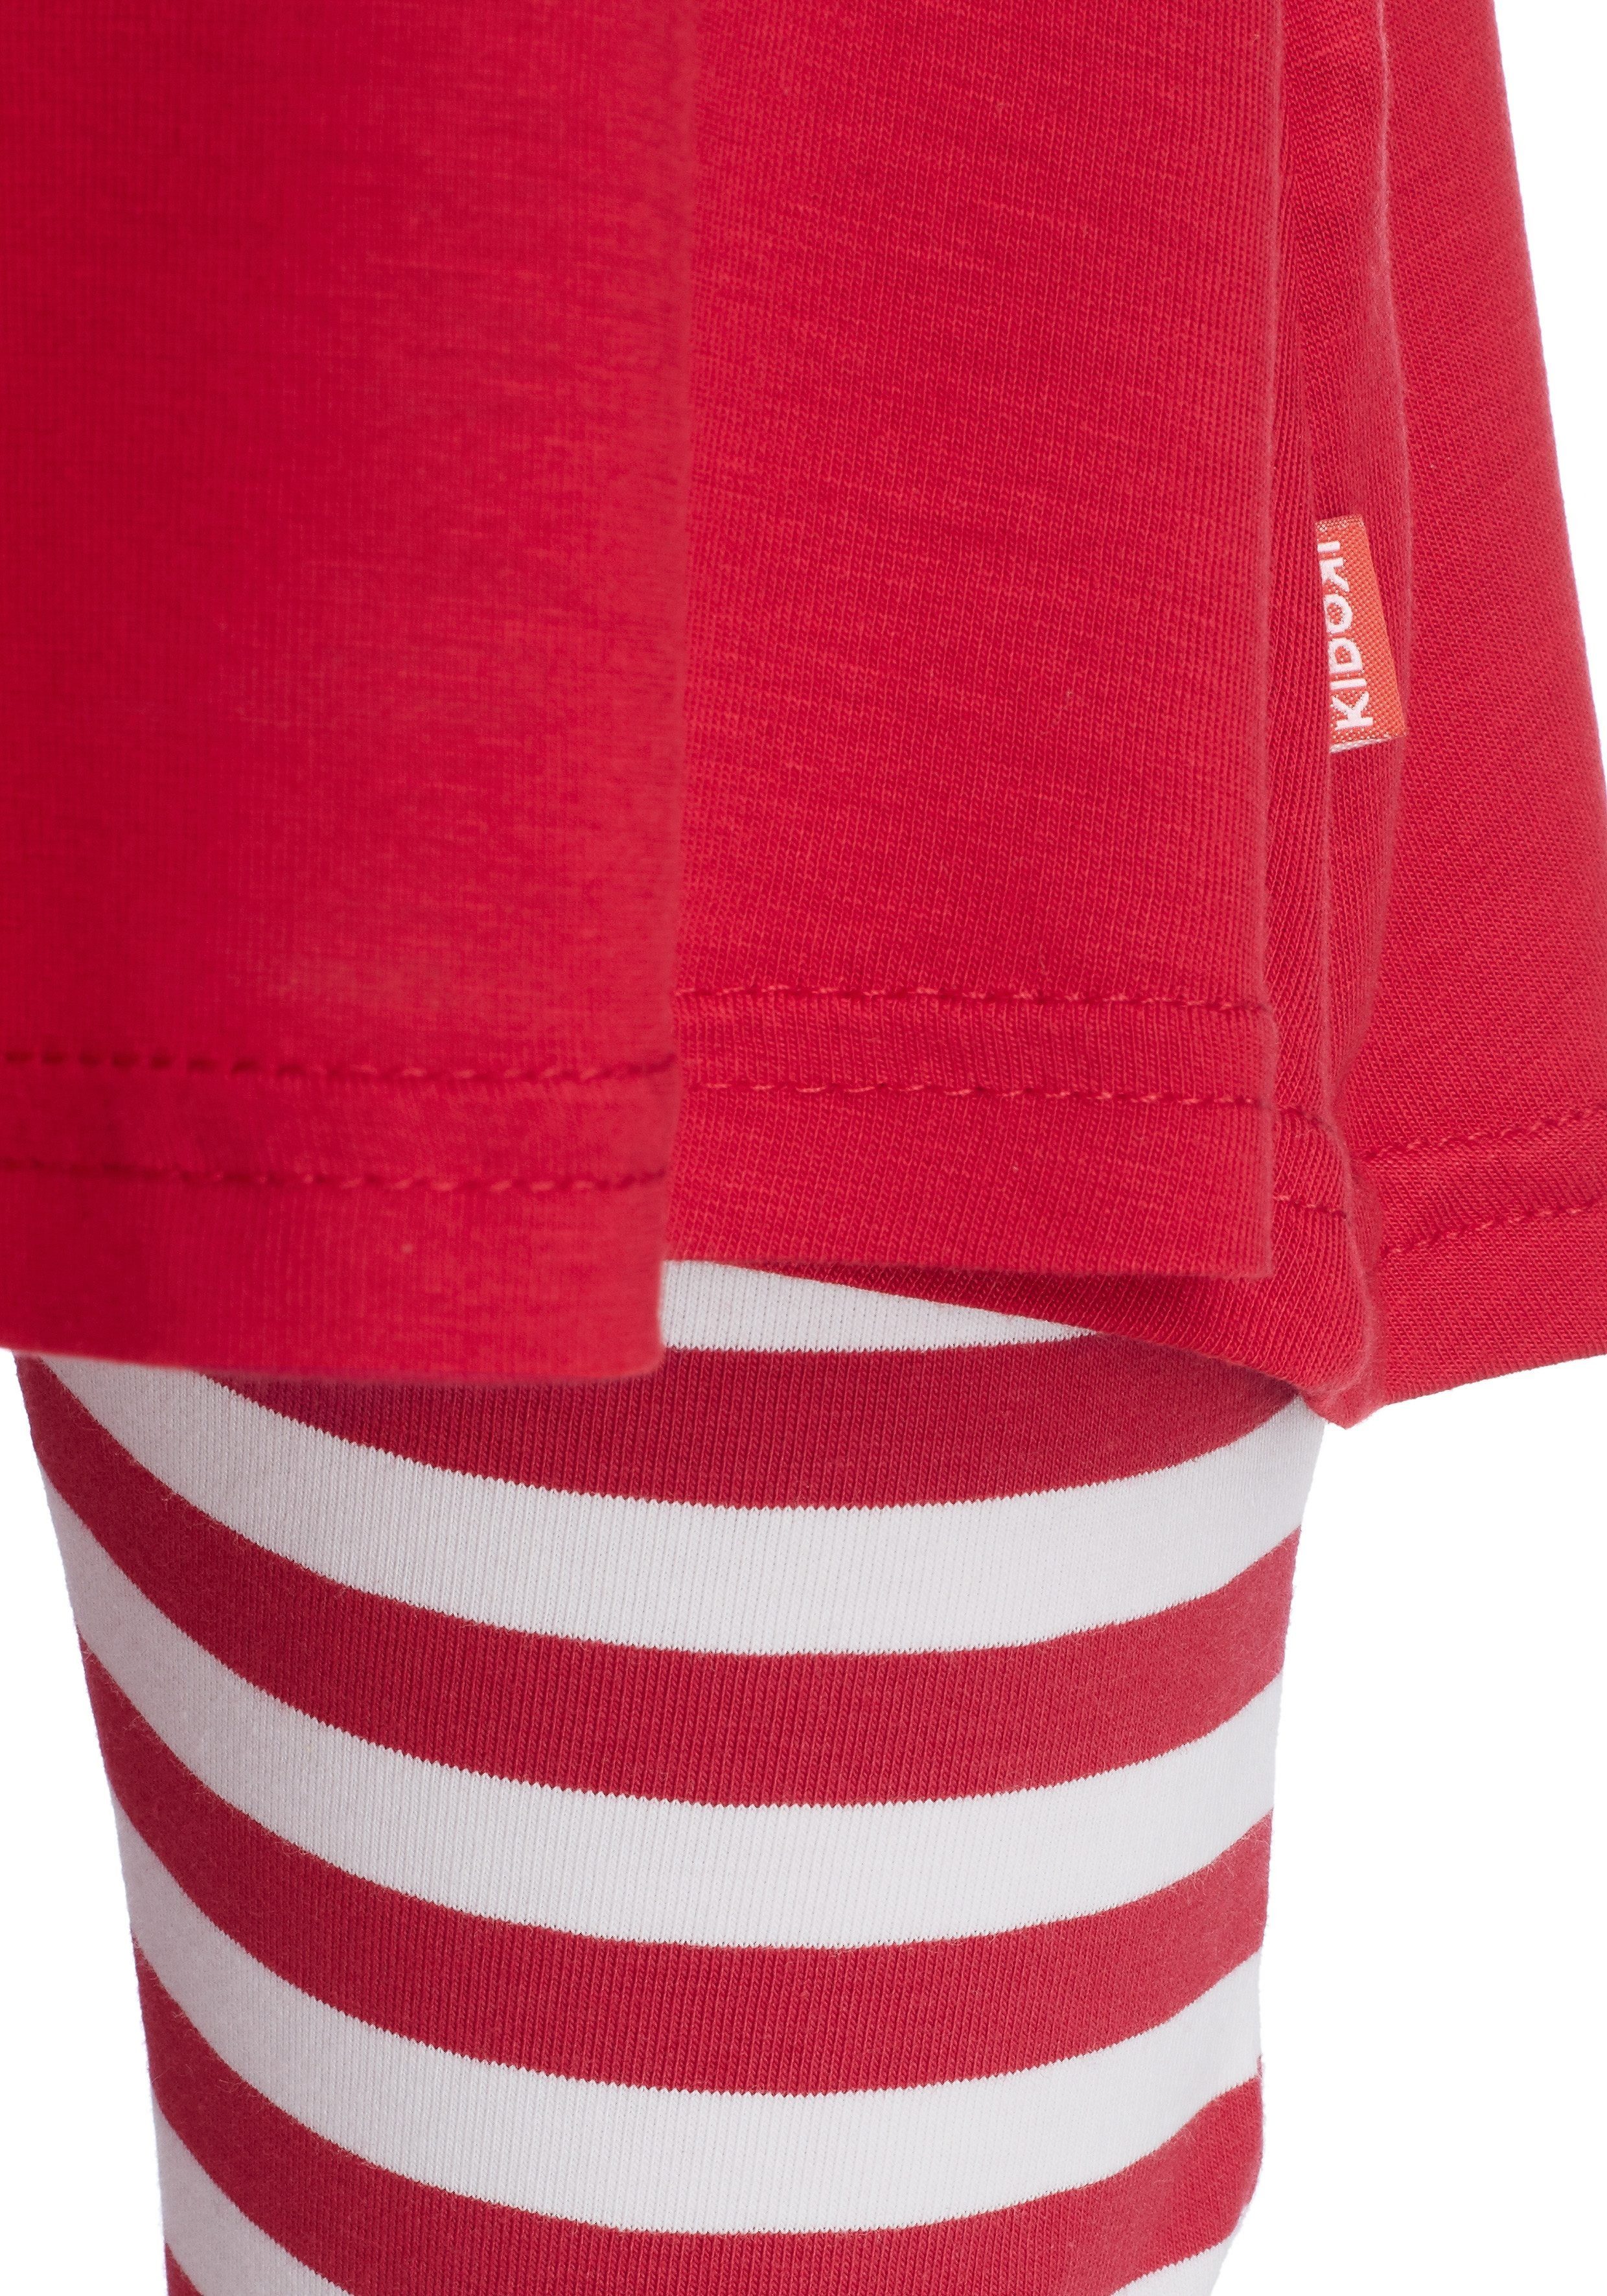 KIDSWORLD Kleid, Leggings rot-weiß und Haarband maritim geringelt Haarband & (Set, Capri 3-tlg)